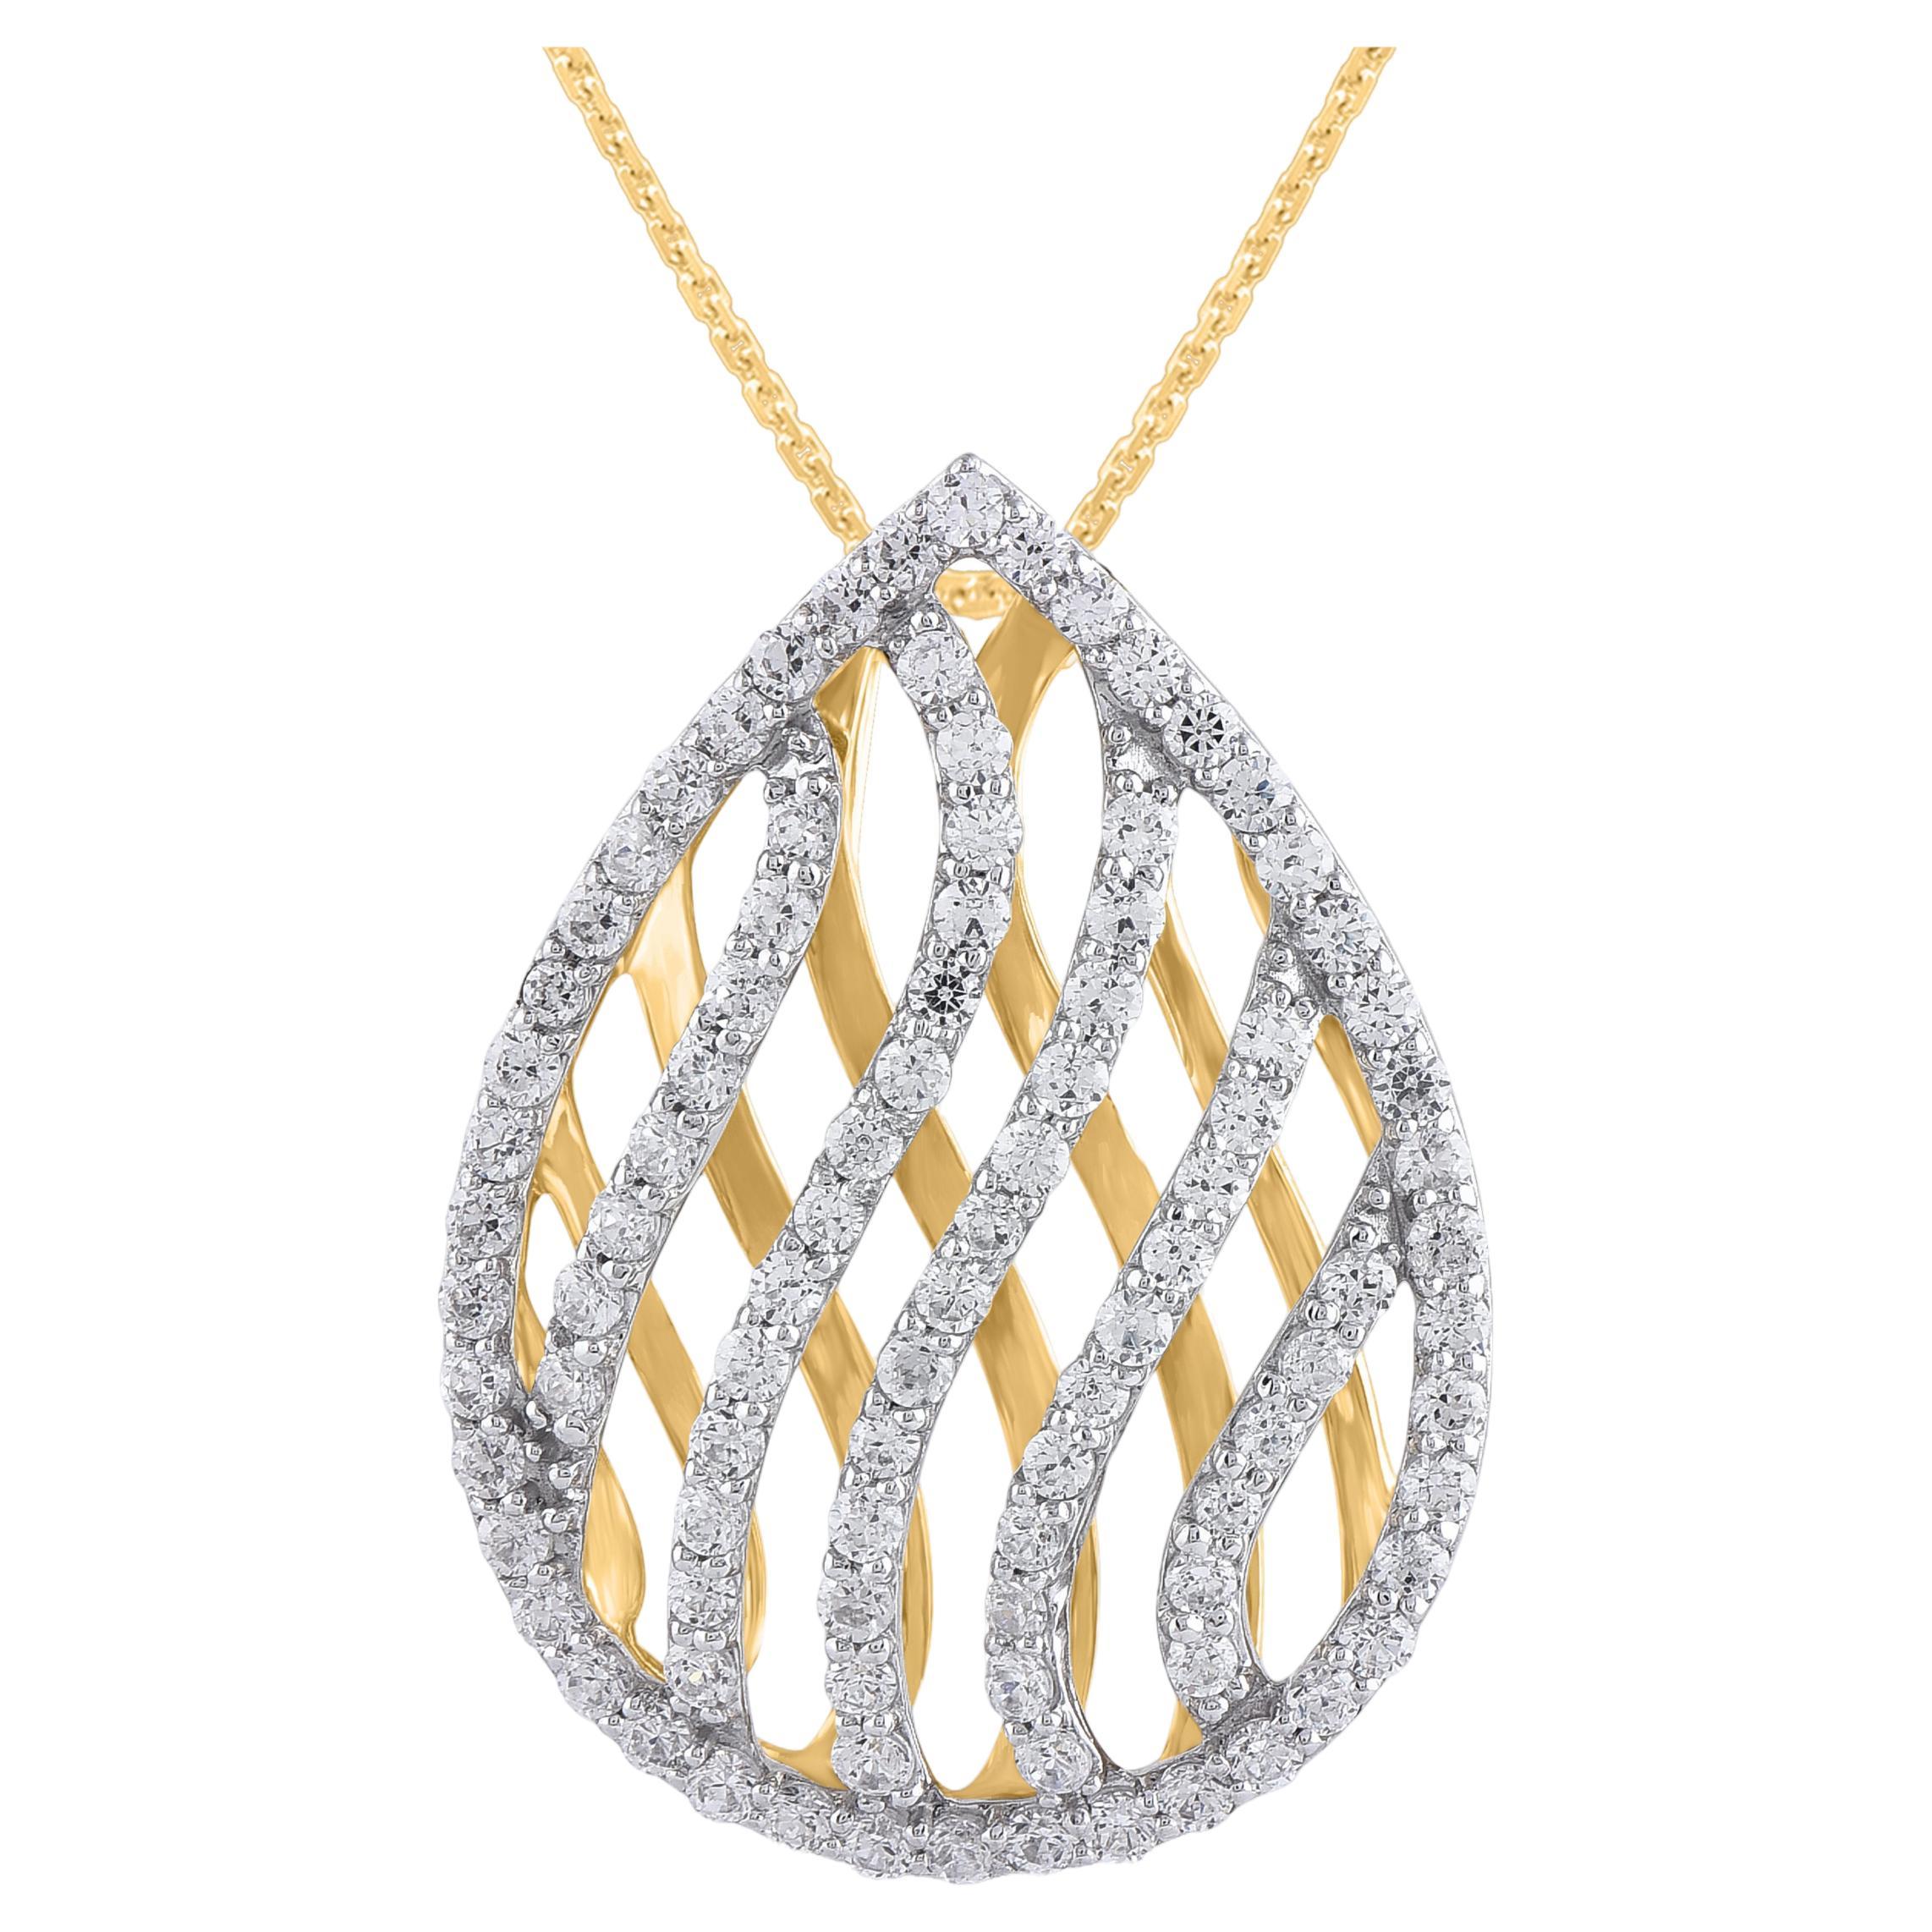  TJD 0.75 Carat Brilliant Cut Diamond Drop Pendant Necklace in 14KT Yellow Gold For Sale